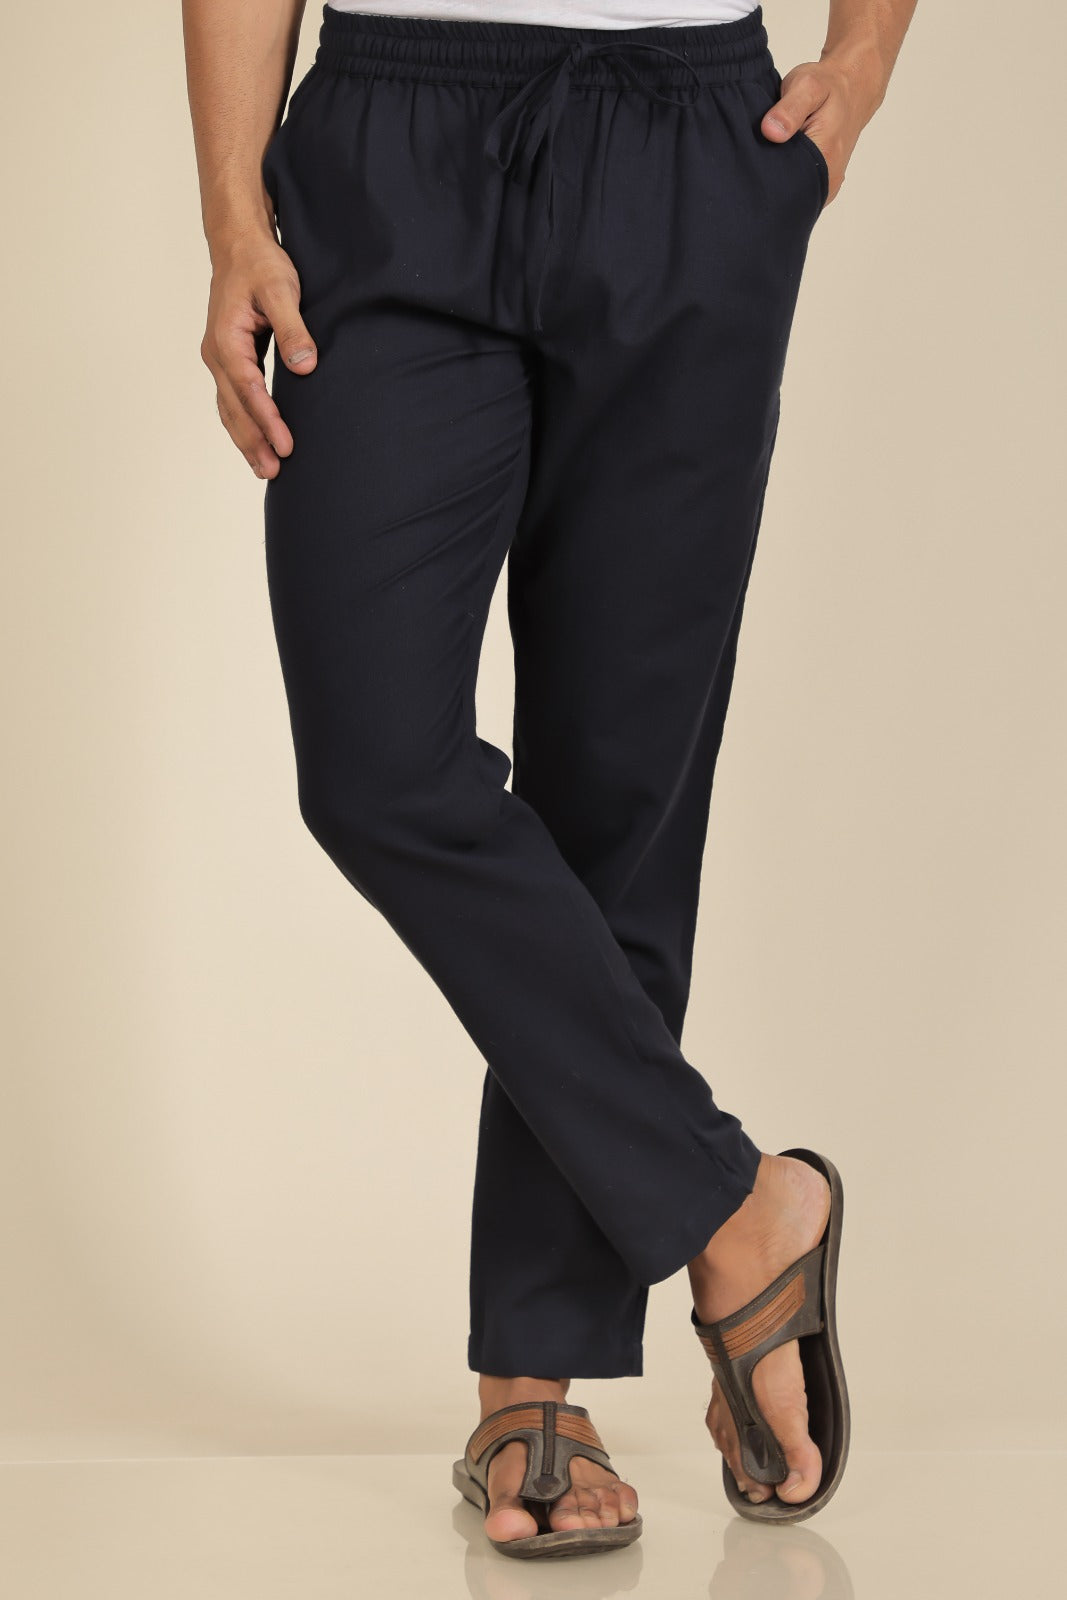 Southloom Jaipur Cotton Solid Black Pants for Men